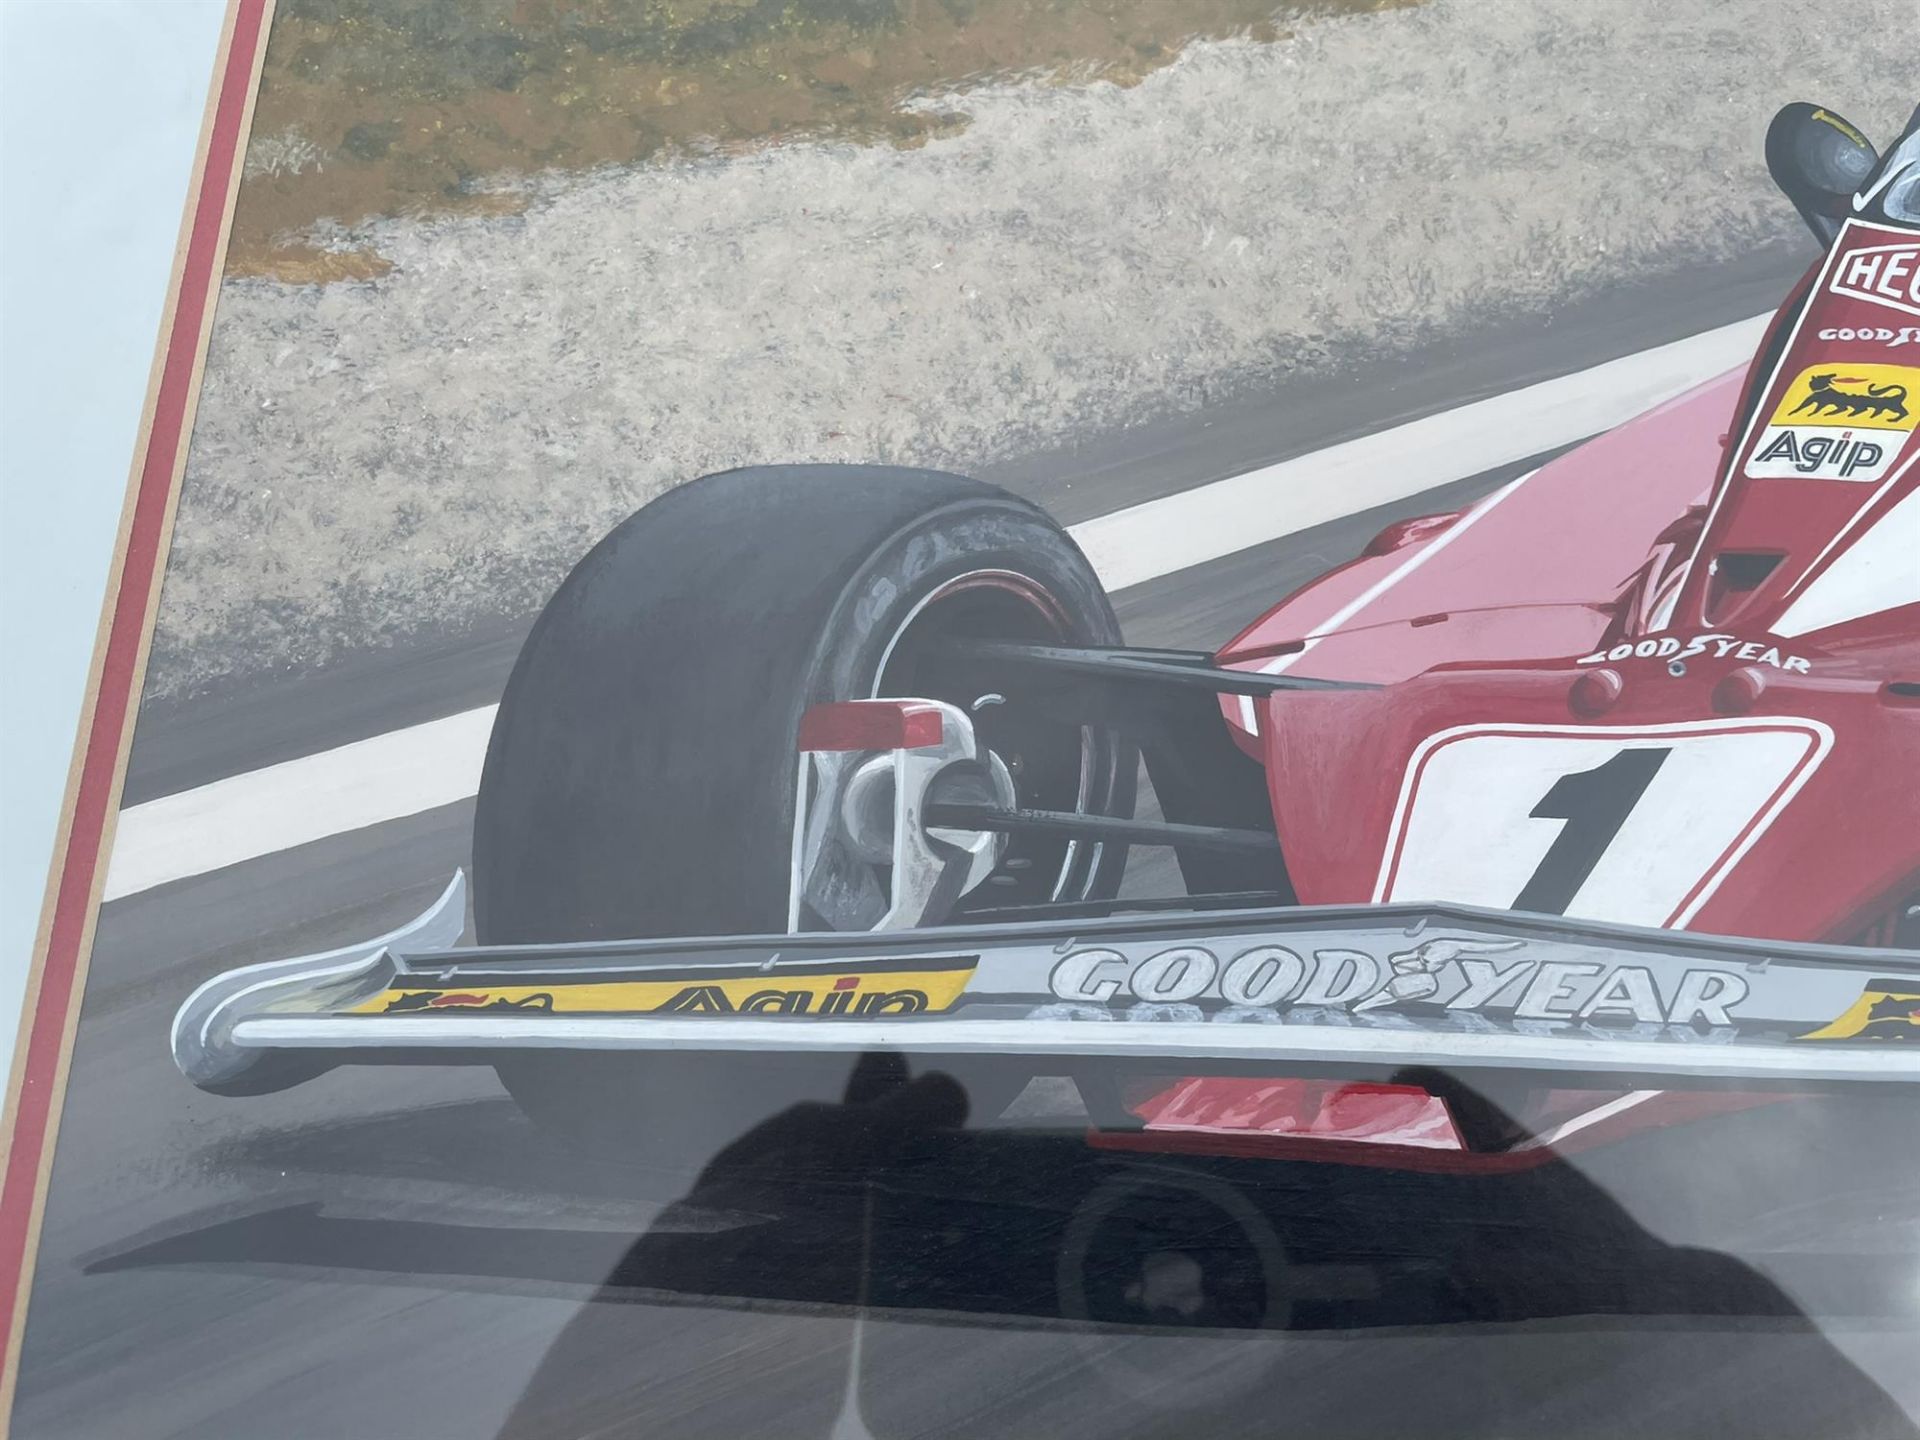 Assorted Racing Ferrari Framed Prints - Image 6 of 9